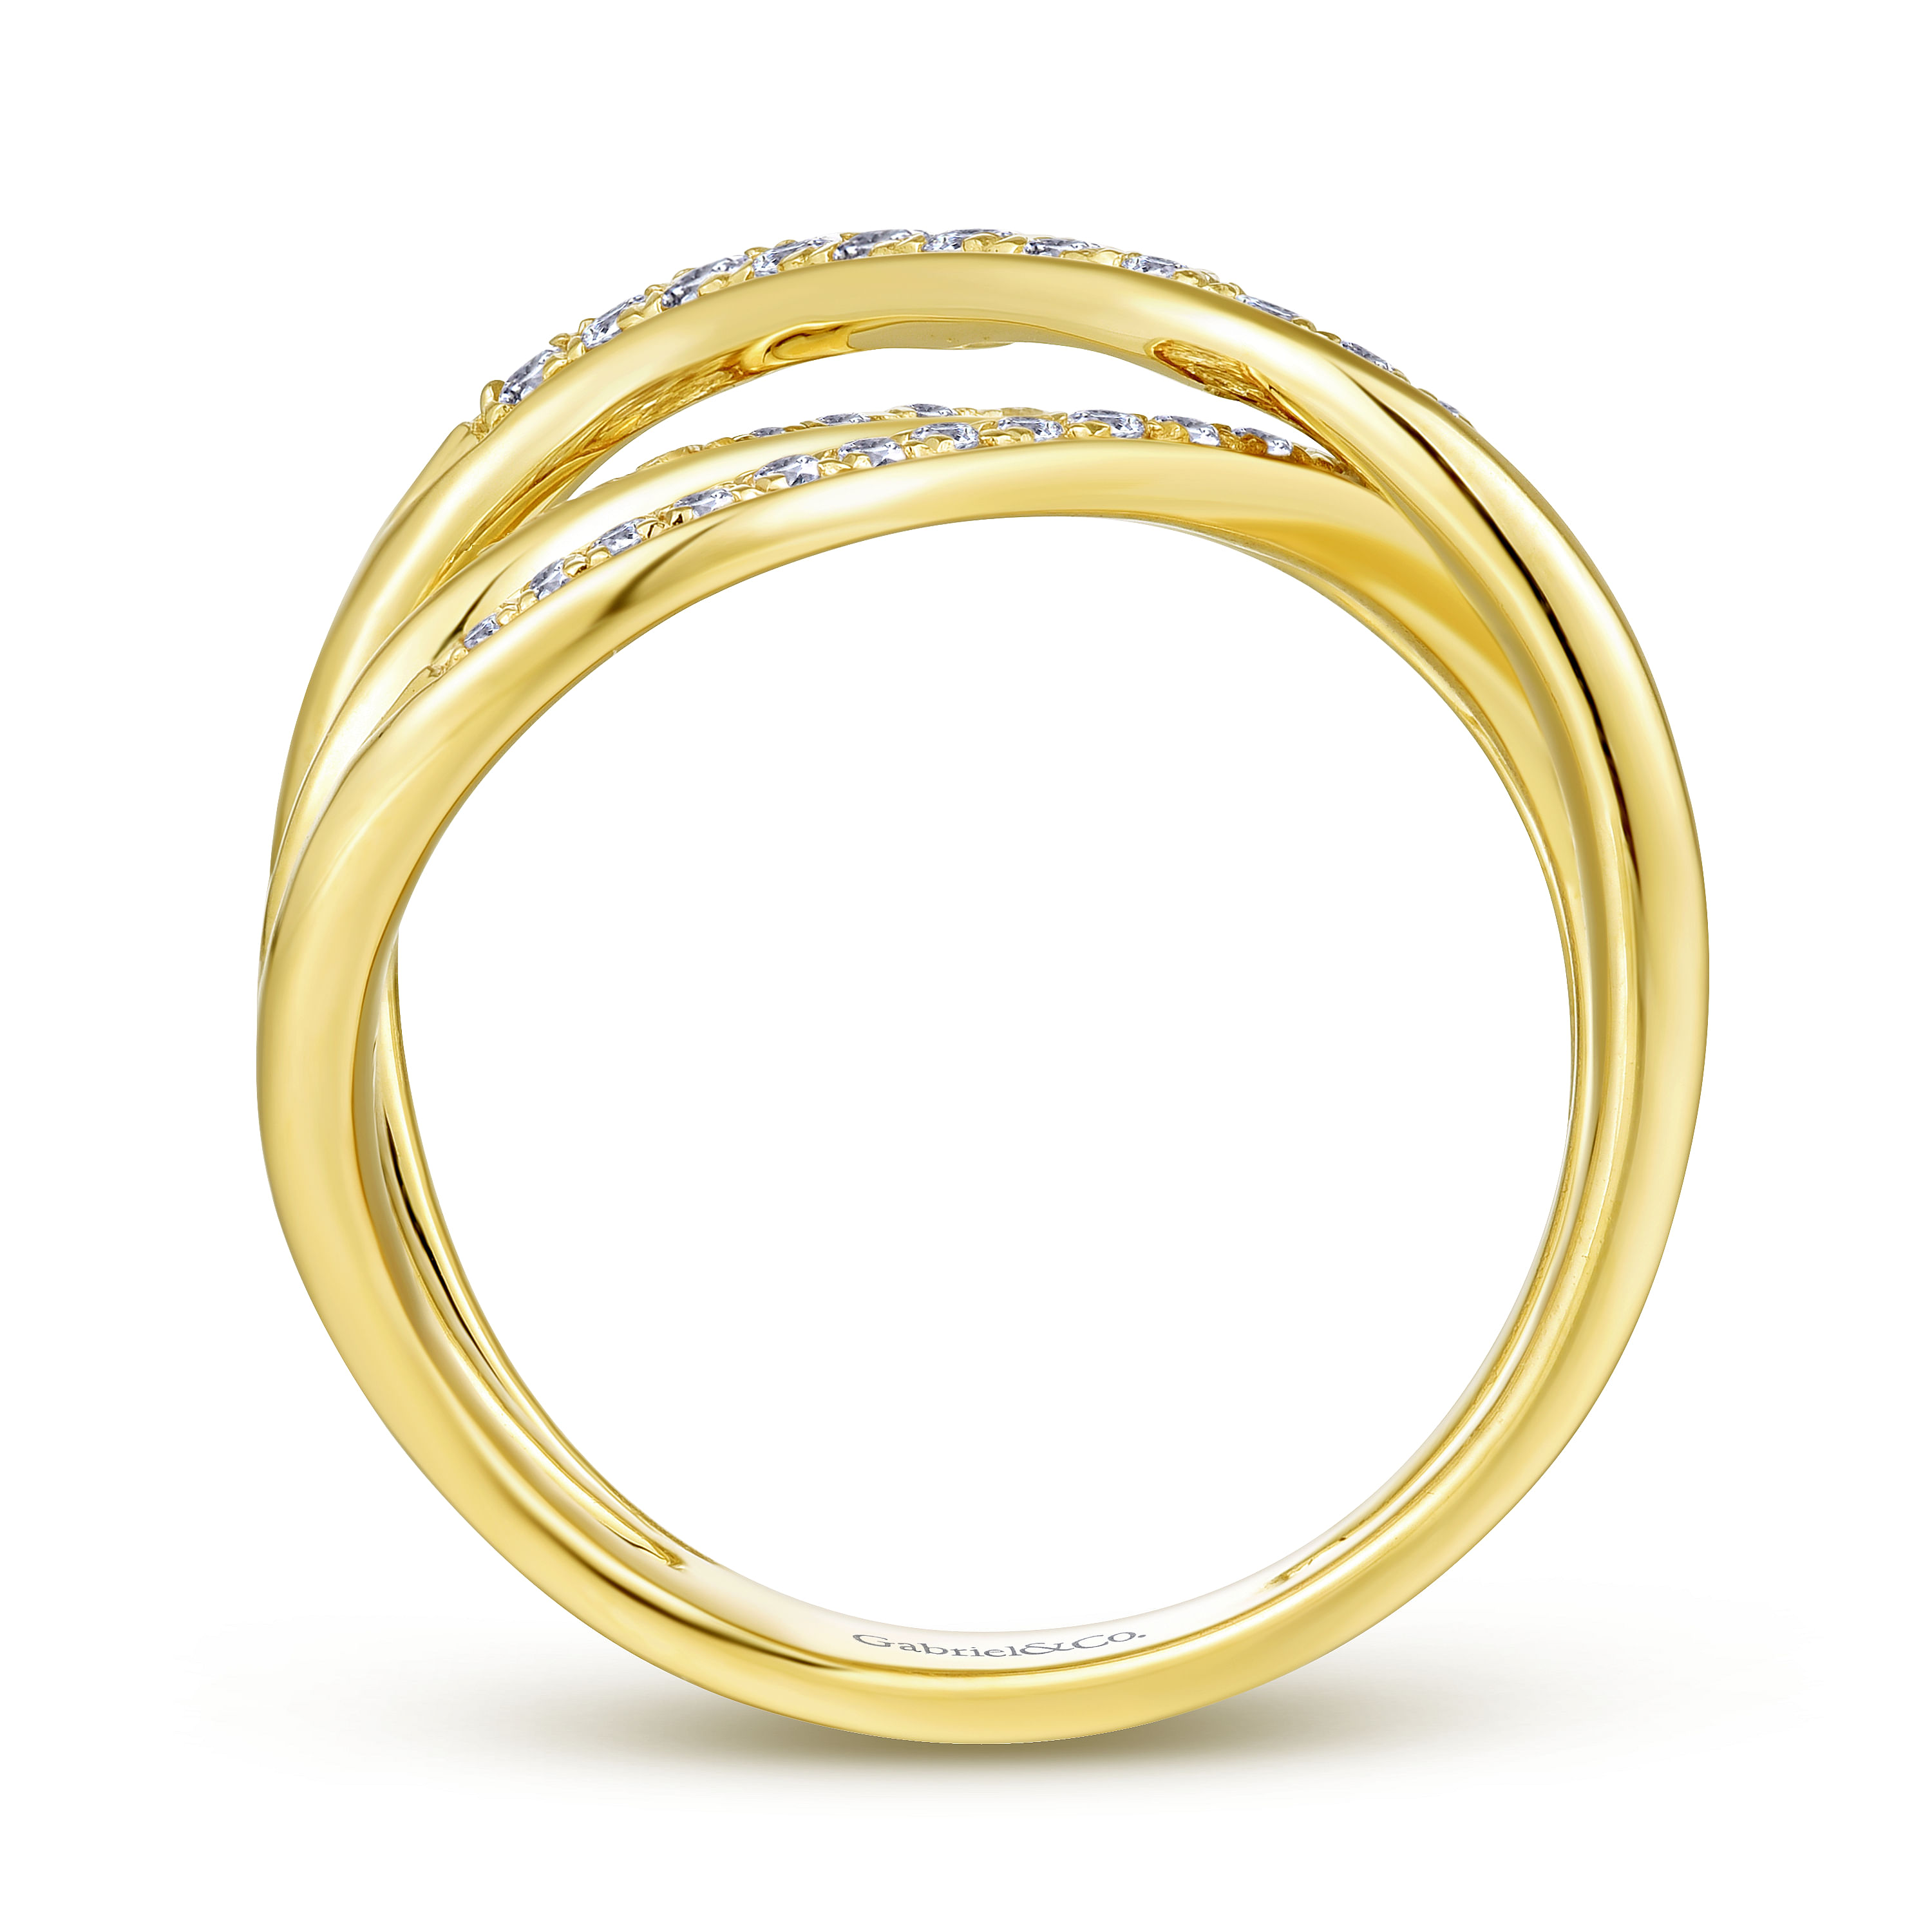 14K Yellow Gold Twisted Diamond Ring - 0.4 ct - Shot 2